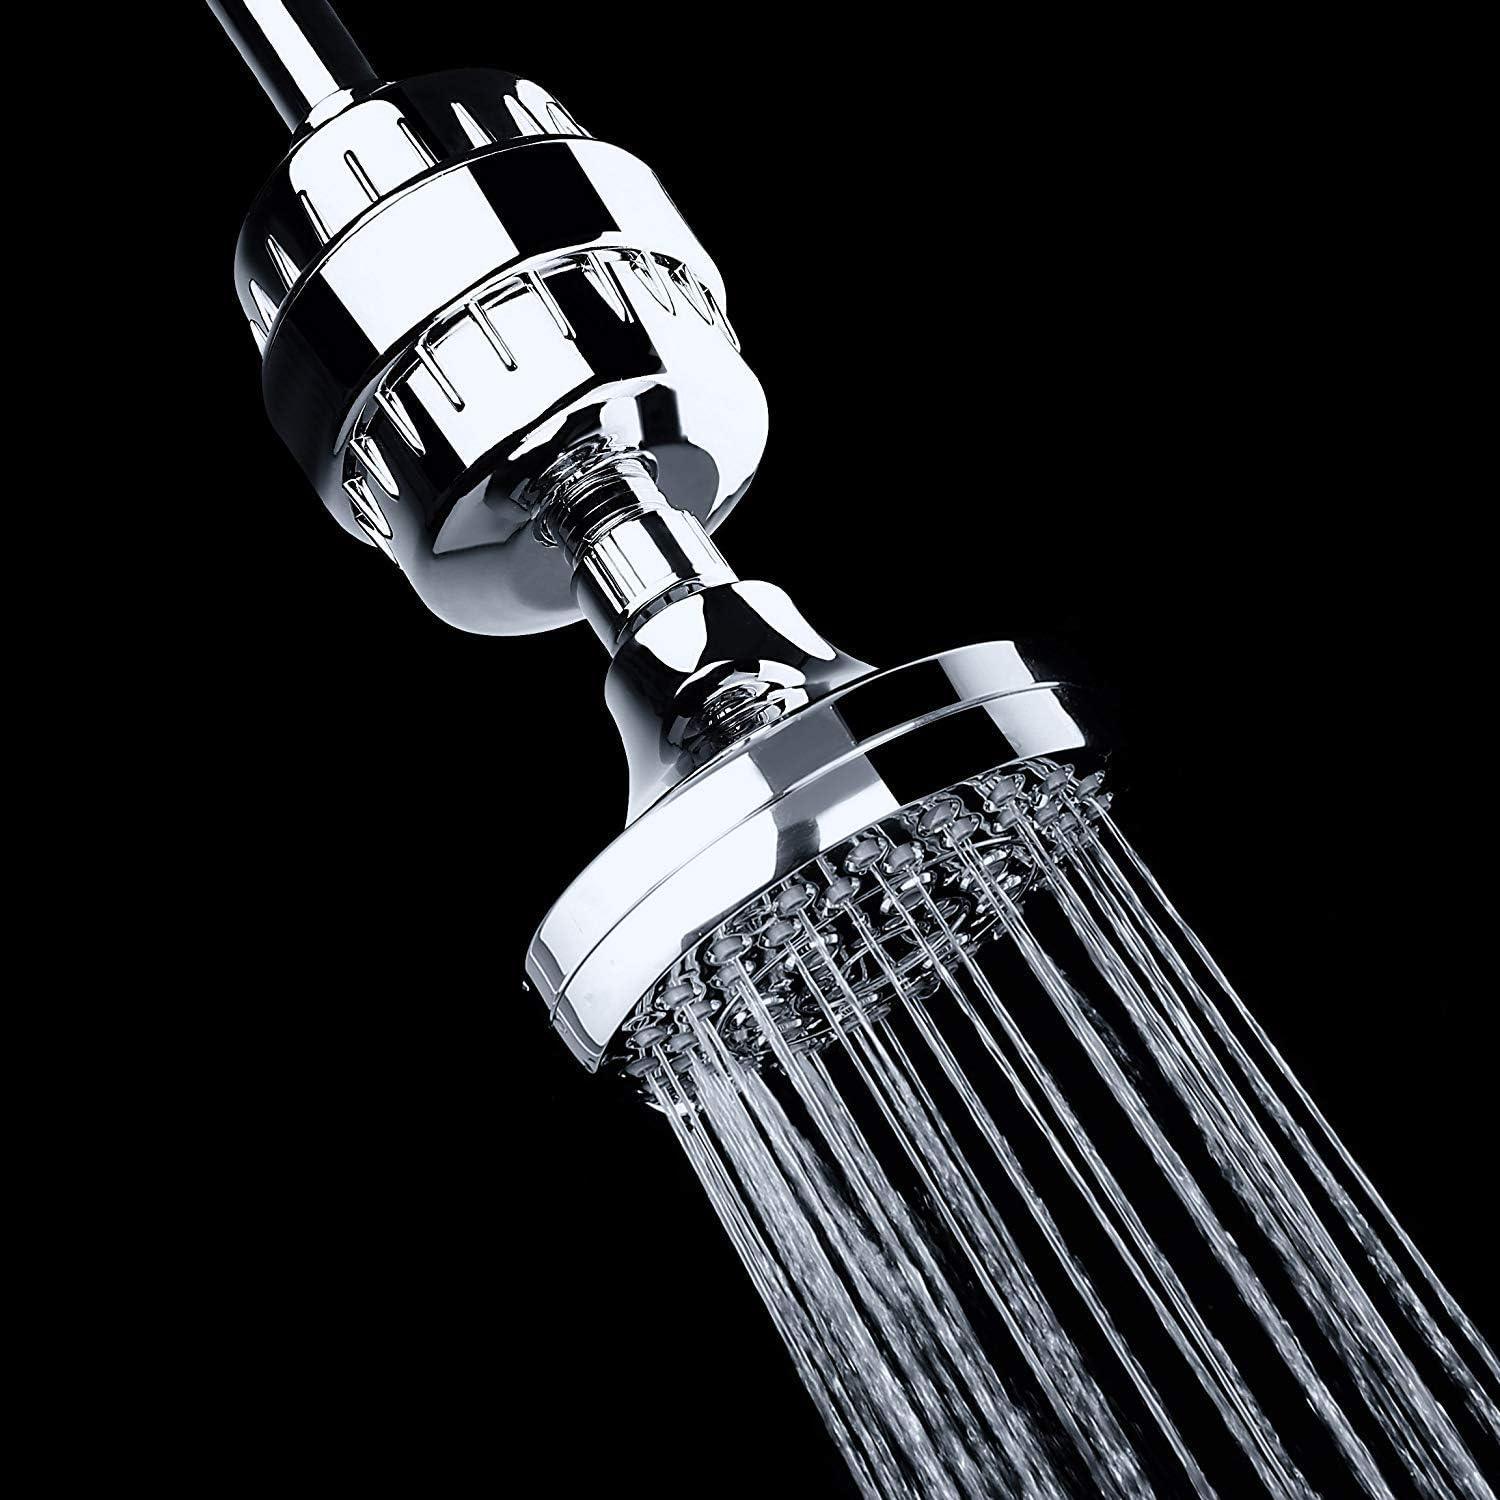 Filtro de ducha Clase 20 Purificador de agua de ducha purificador de agua  de ducha Filtro de cabezal de ducha universal con 2 Filter_ssxjv  reemplazables